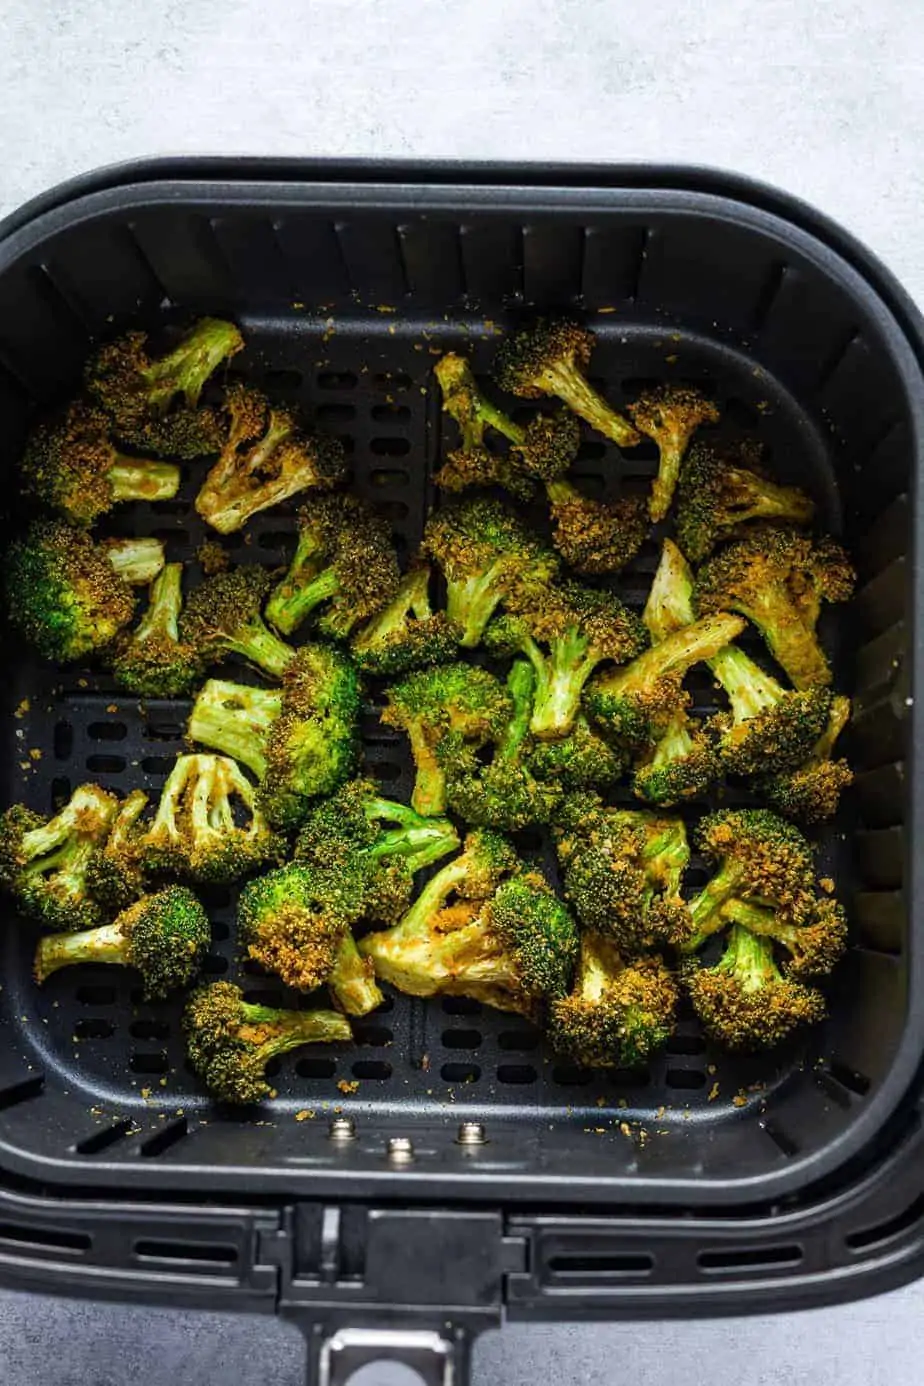 crispy air fryer broccoli inside the air fryer basket